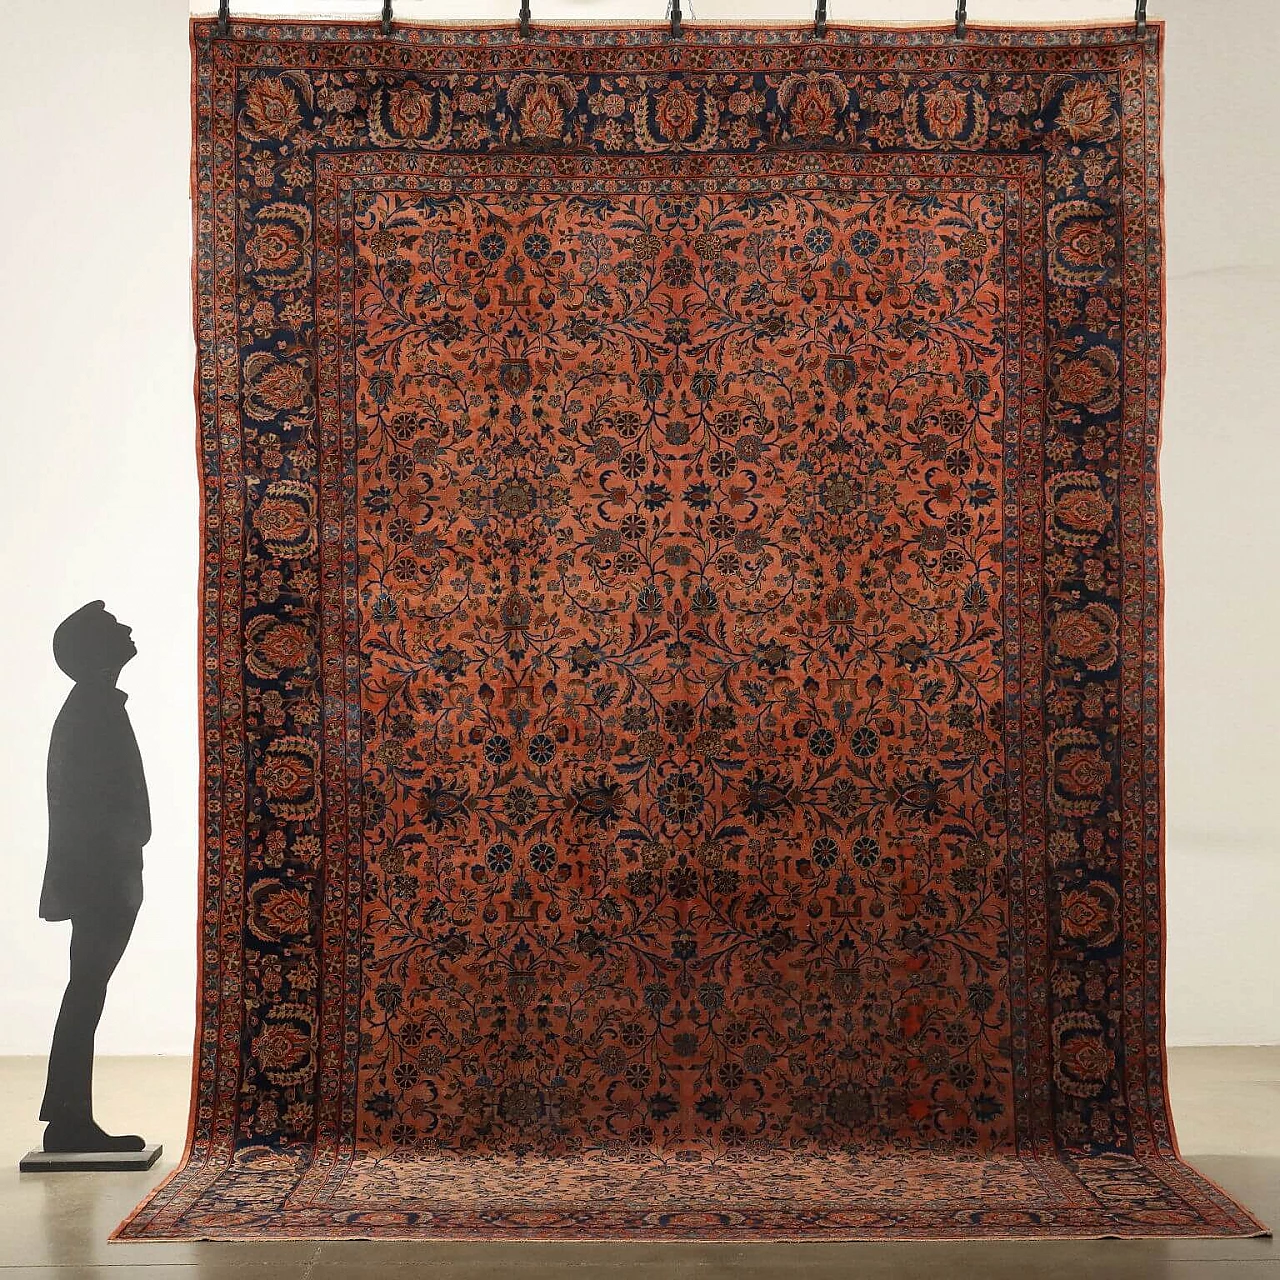 Iranian Keshan Manchester cotton and wool carpet 2